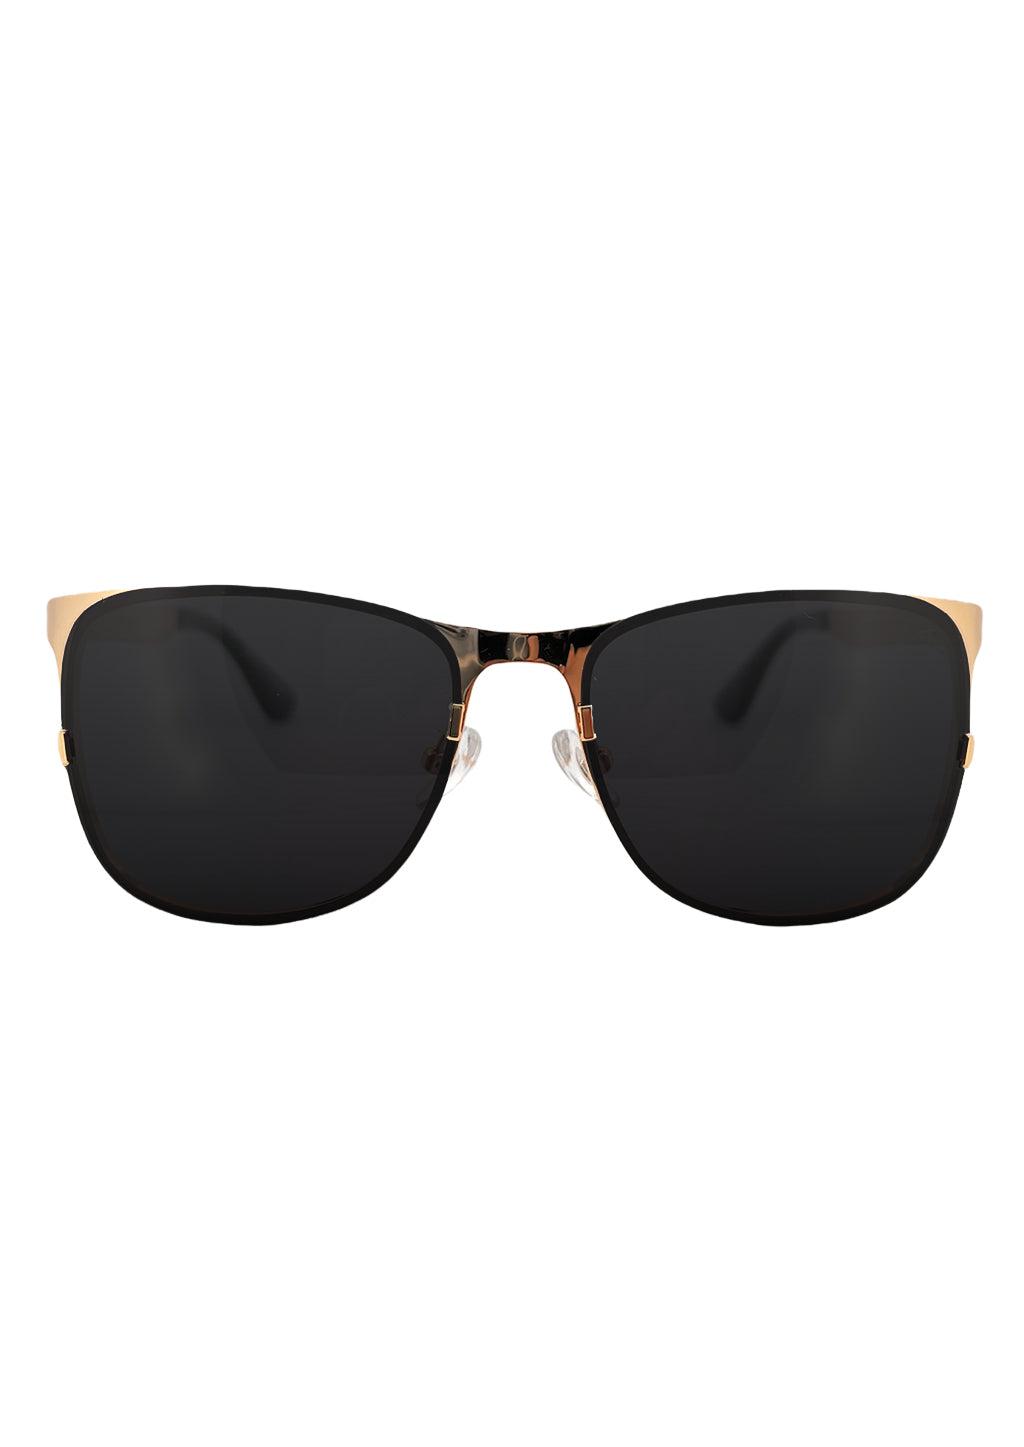 Titanium Wayfarer Sunglasses - V2 - 24K GOLD Plated-1